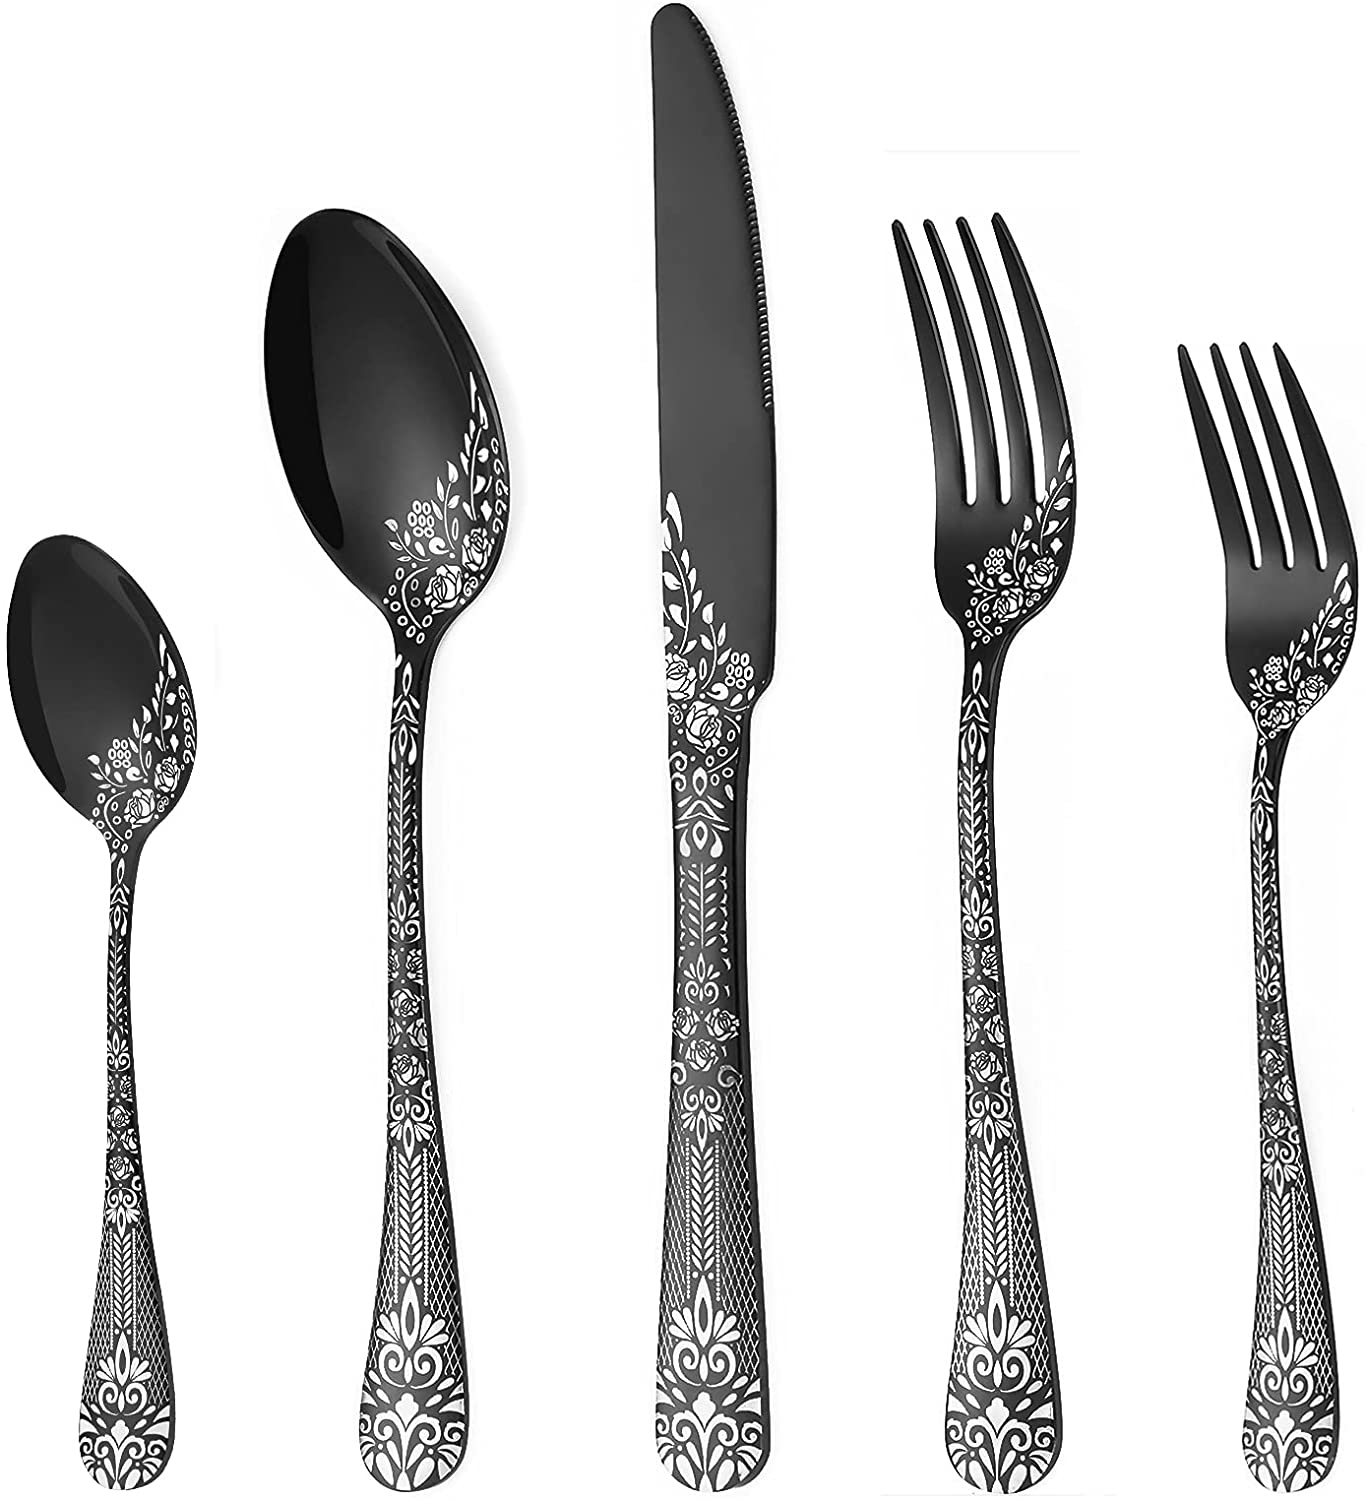 https://www.dontwasteyourmoney.com/wp-content/uploads/2022/03/philipala-laser-engraved-floral-pattern-cutlery-set-20-piece-cutlery-sets.jpg